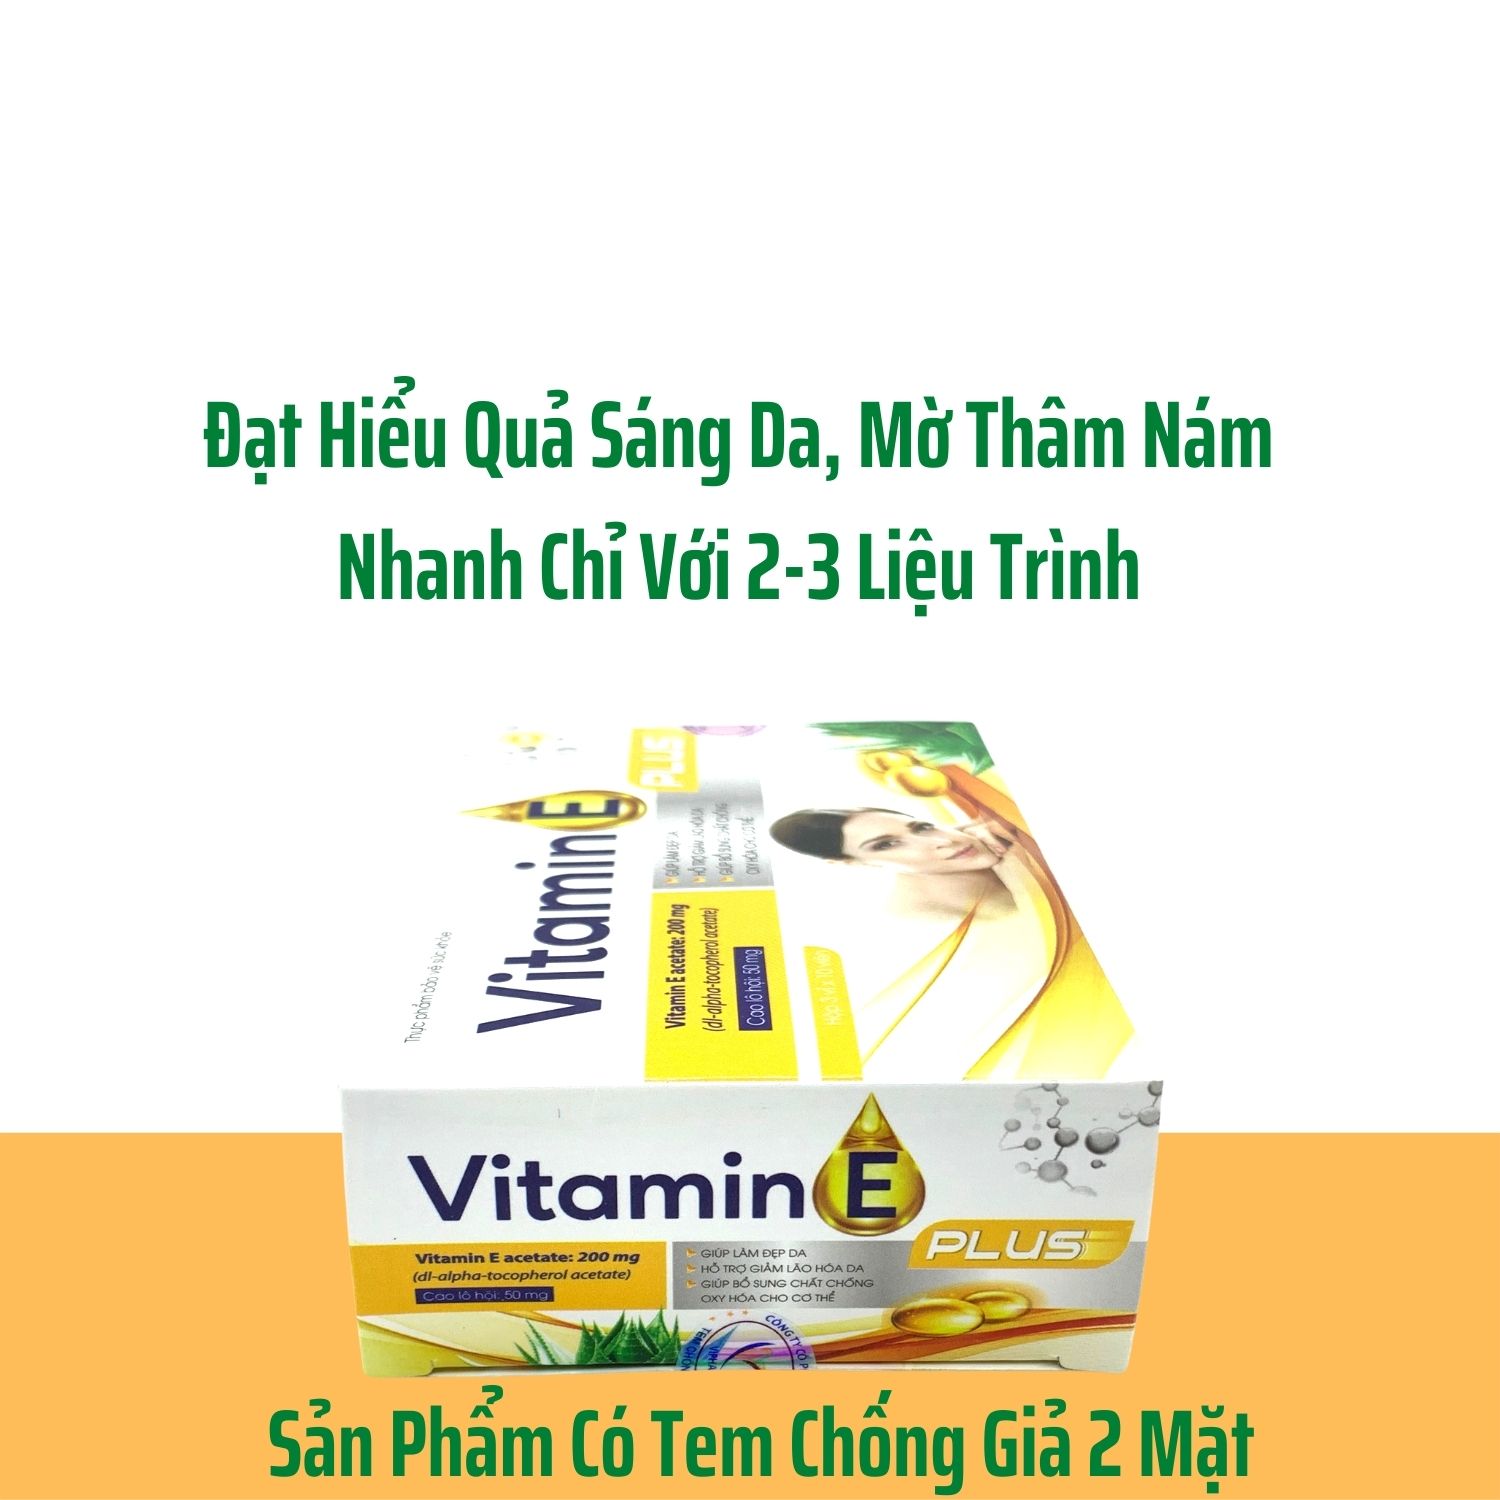 HCM]Vitamin E Plus, Làm Đẹp Da, Ngừa Thâm Nám, Giảm Lão Hóa Da, Bổ